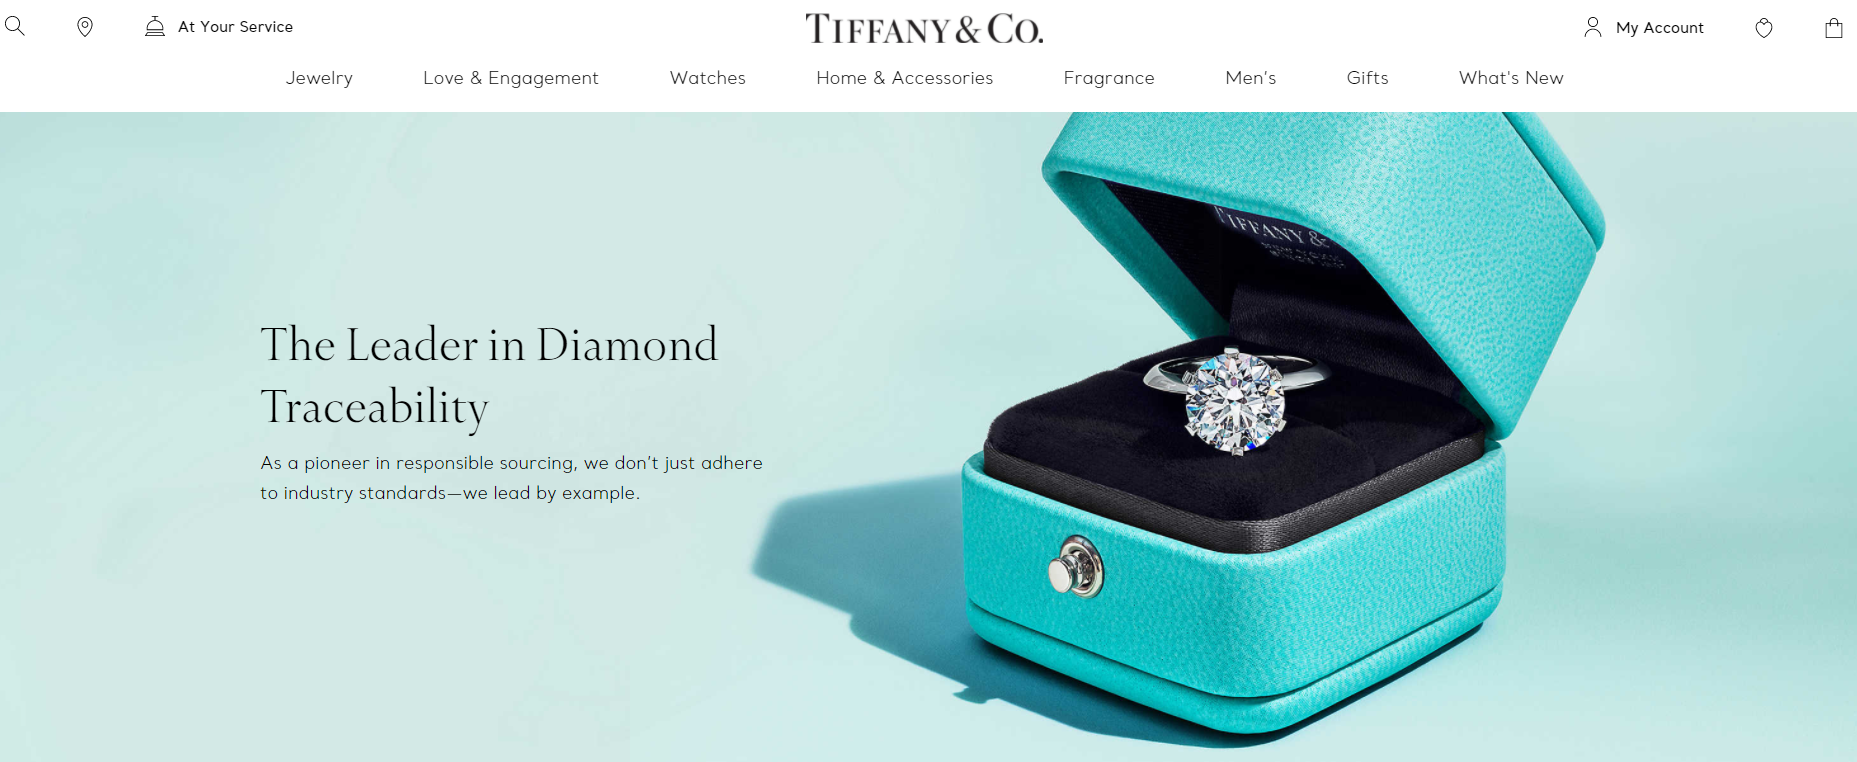 Tiffany 宣布公布钻石从开采到制作全过程的详细信息，创下珠宝业界首例